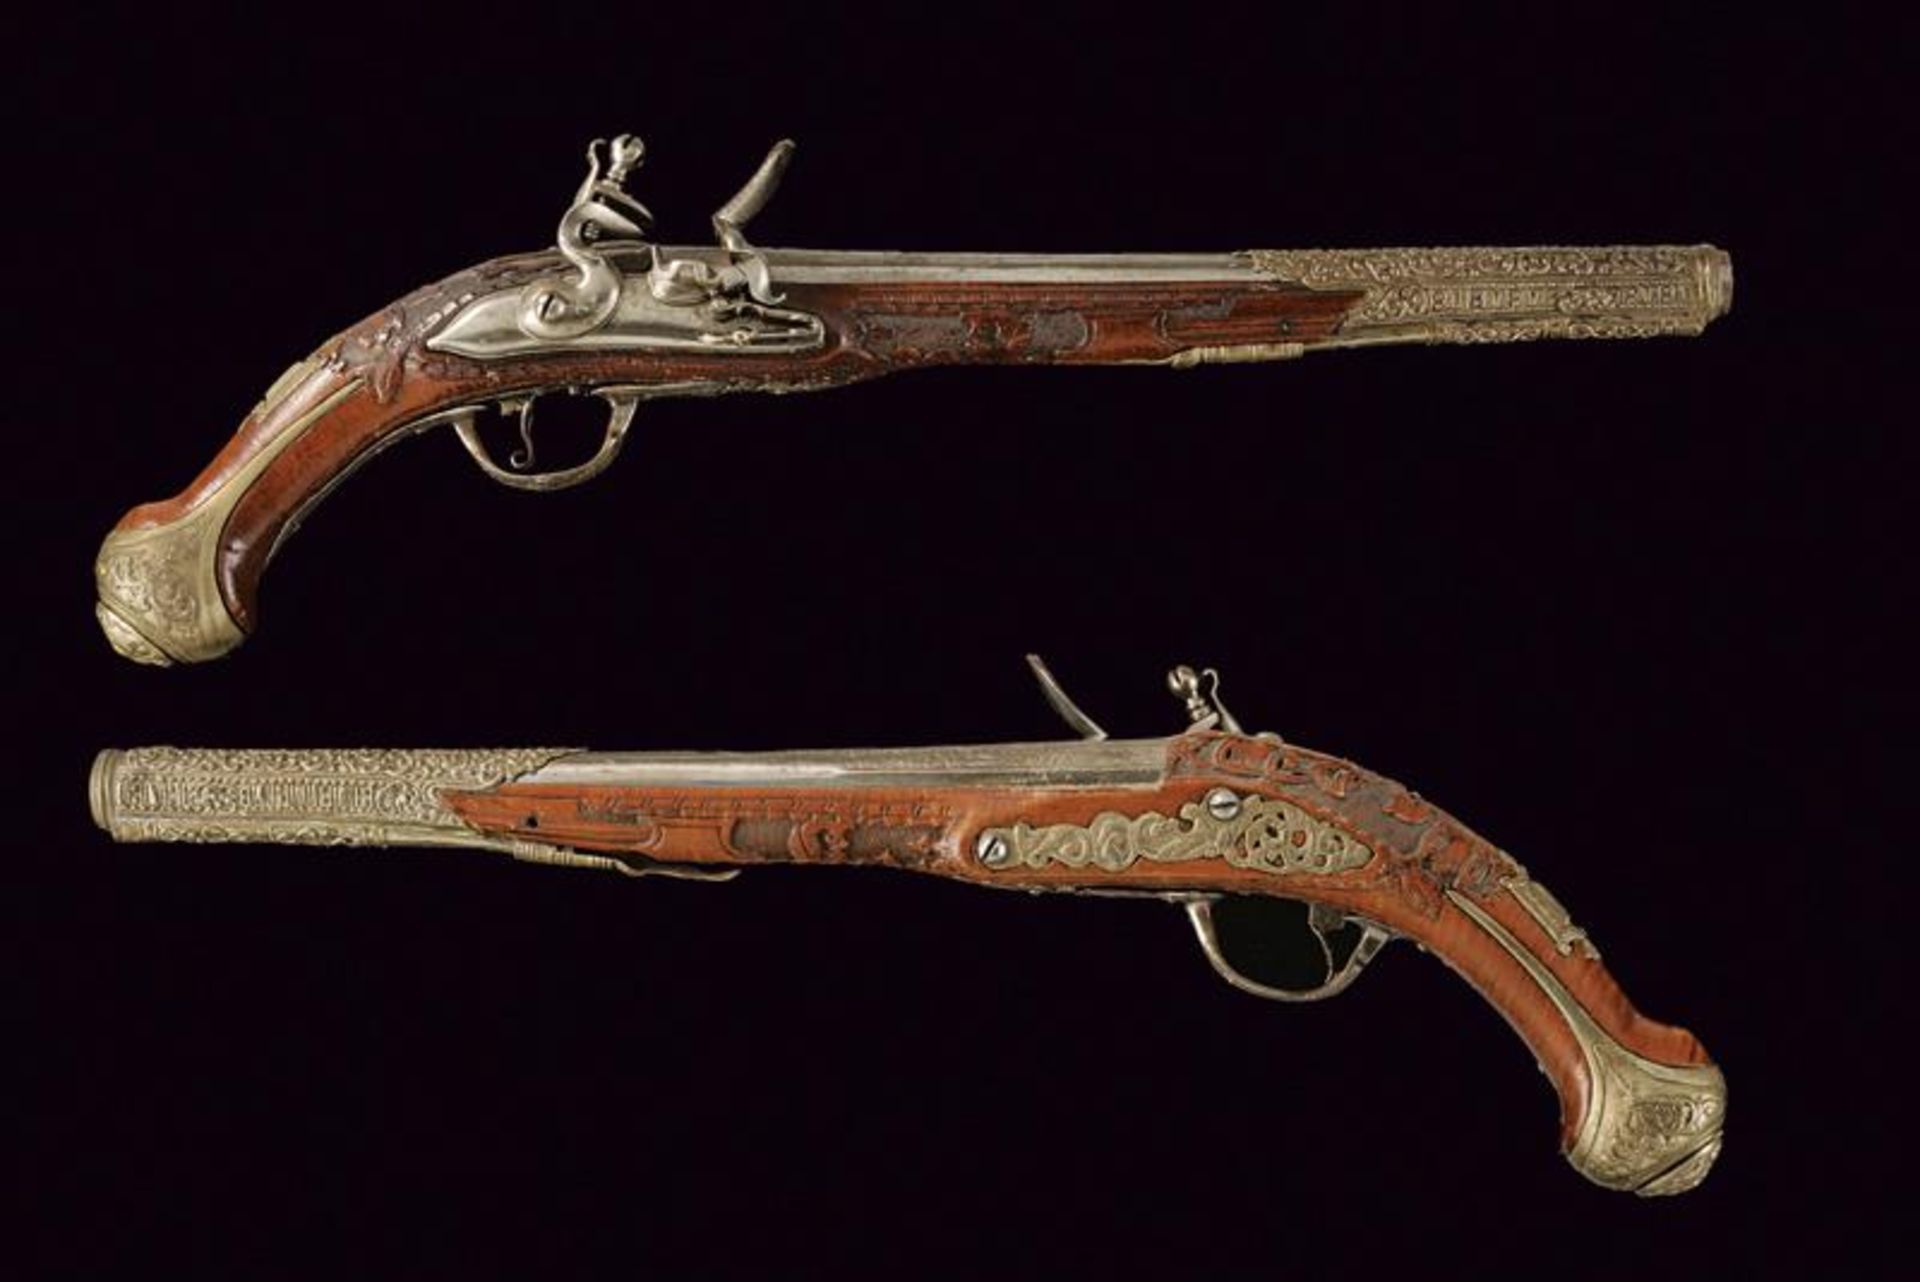 A fine pair of flintlock pistols